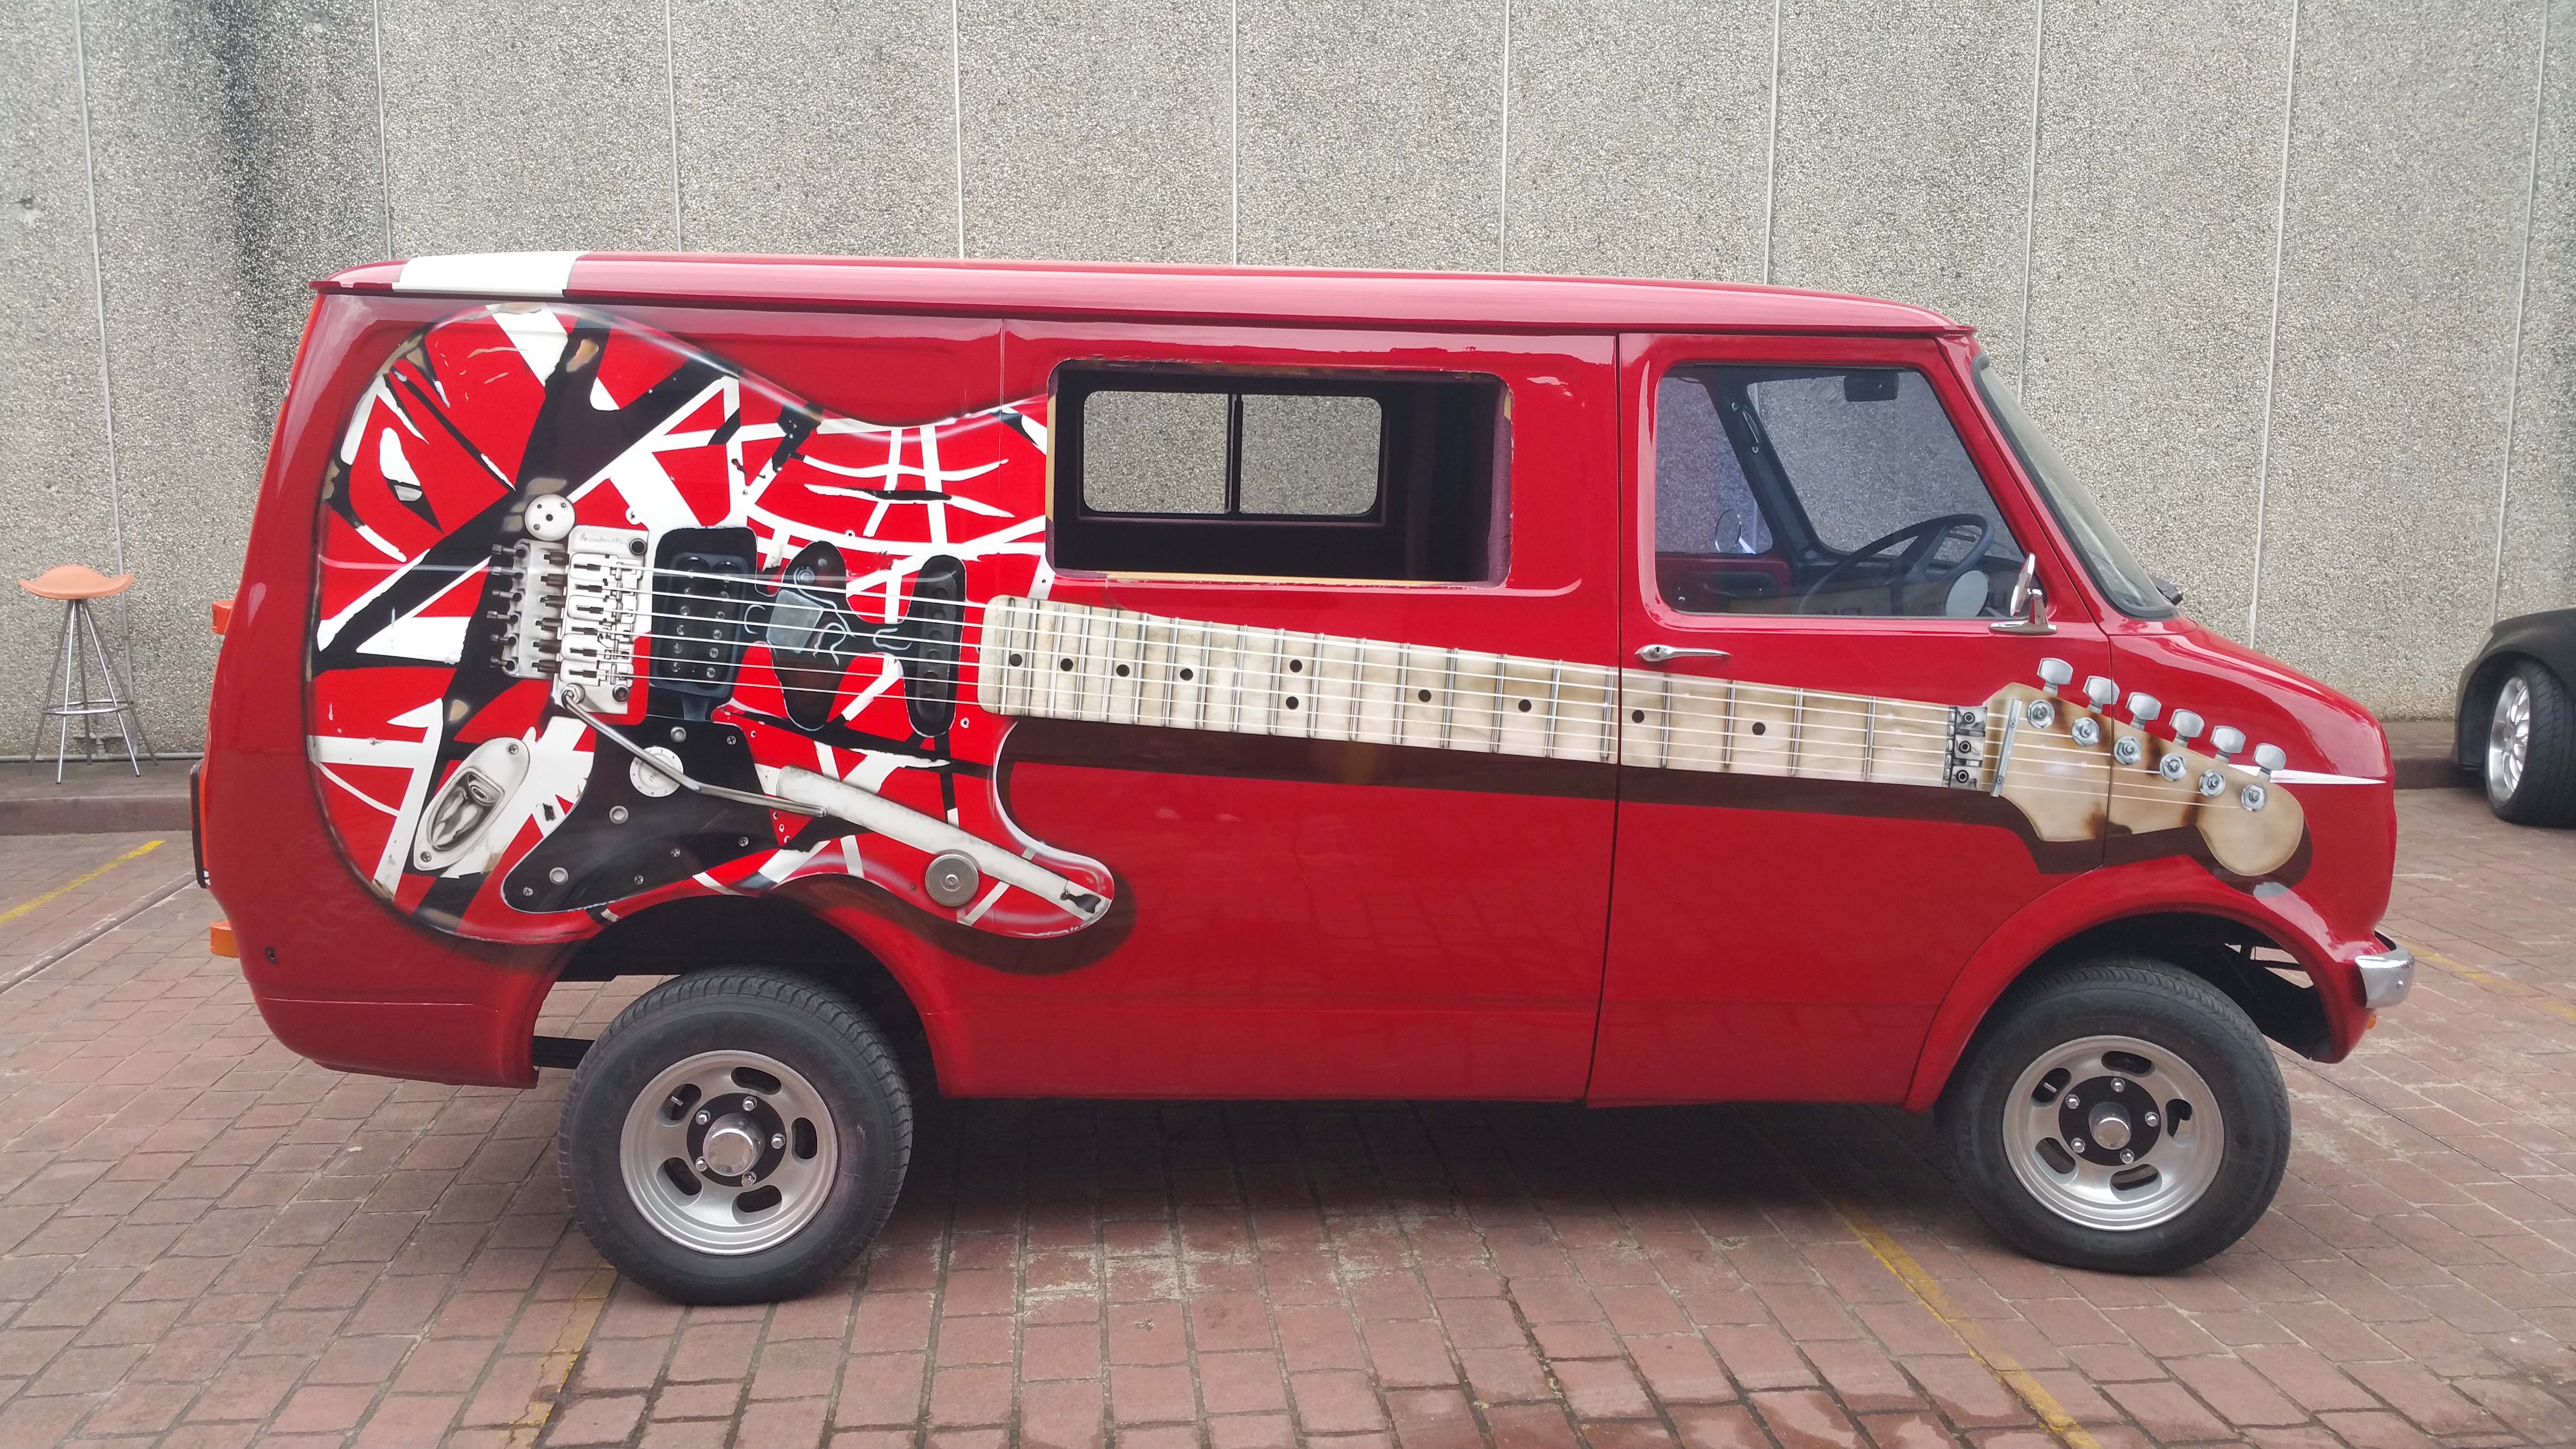 Van - Guitar Bedford